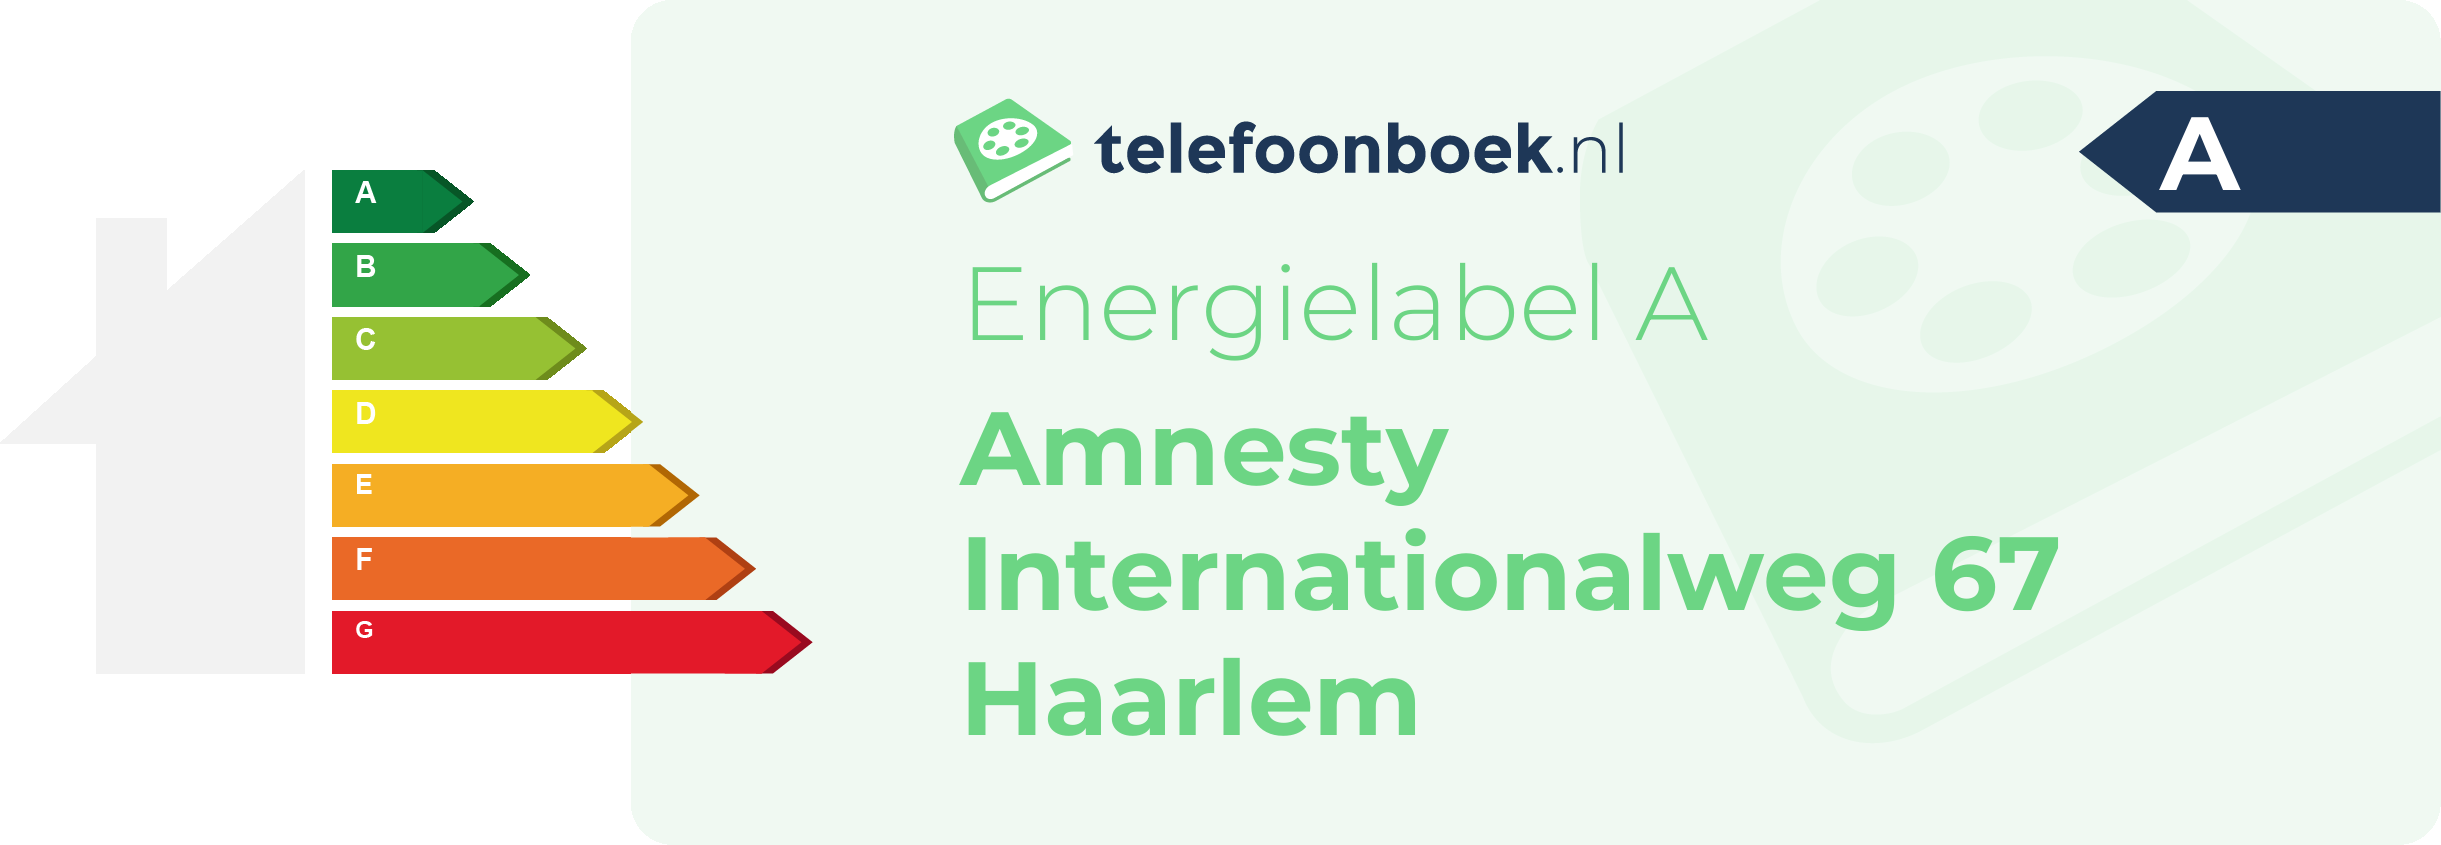 Energielabel Amnesty Internationalweg 67 Haarlem